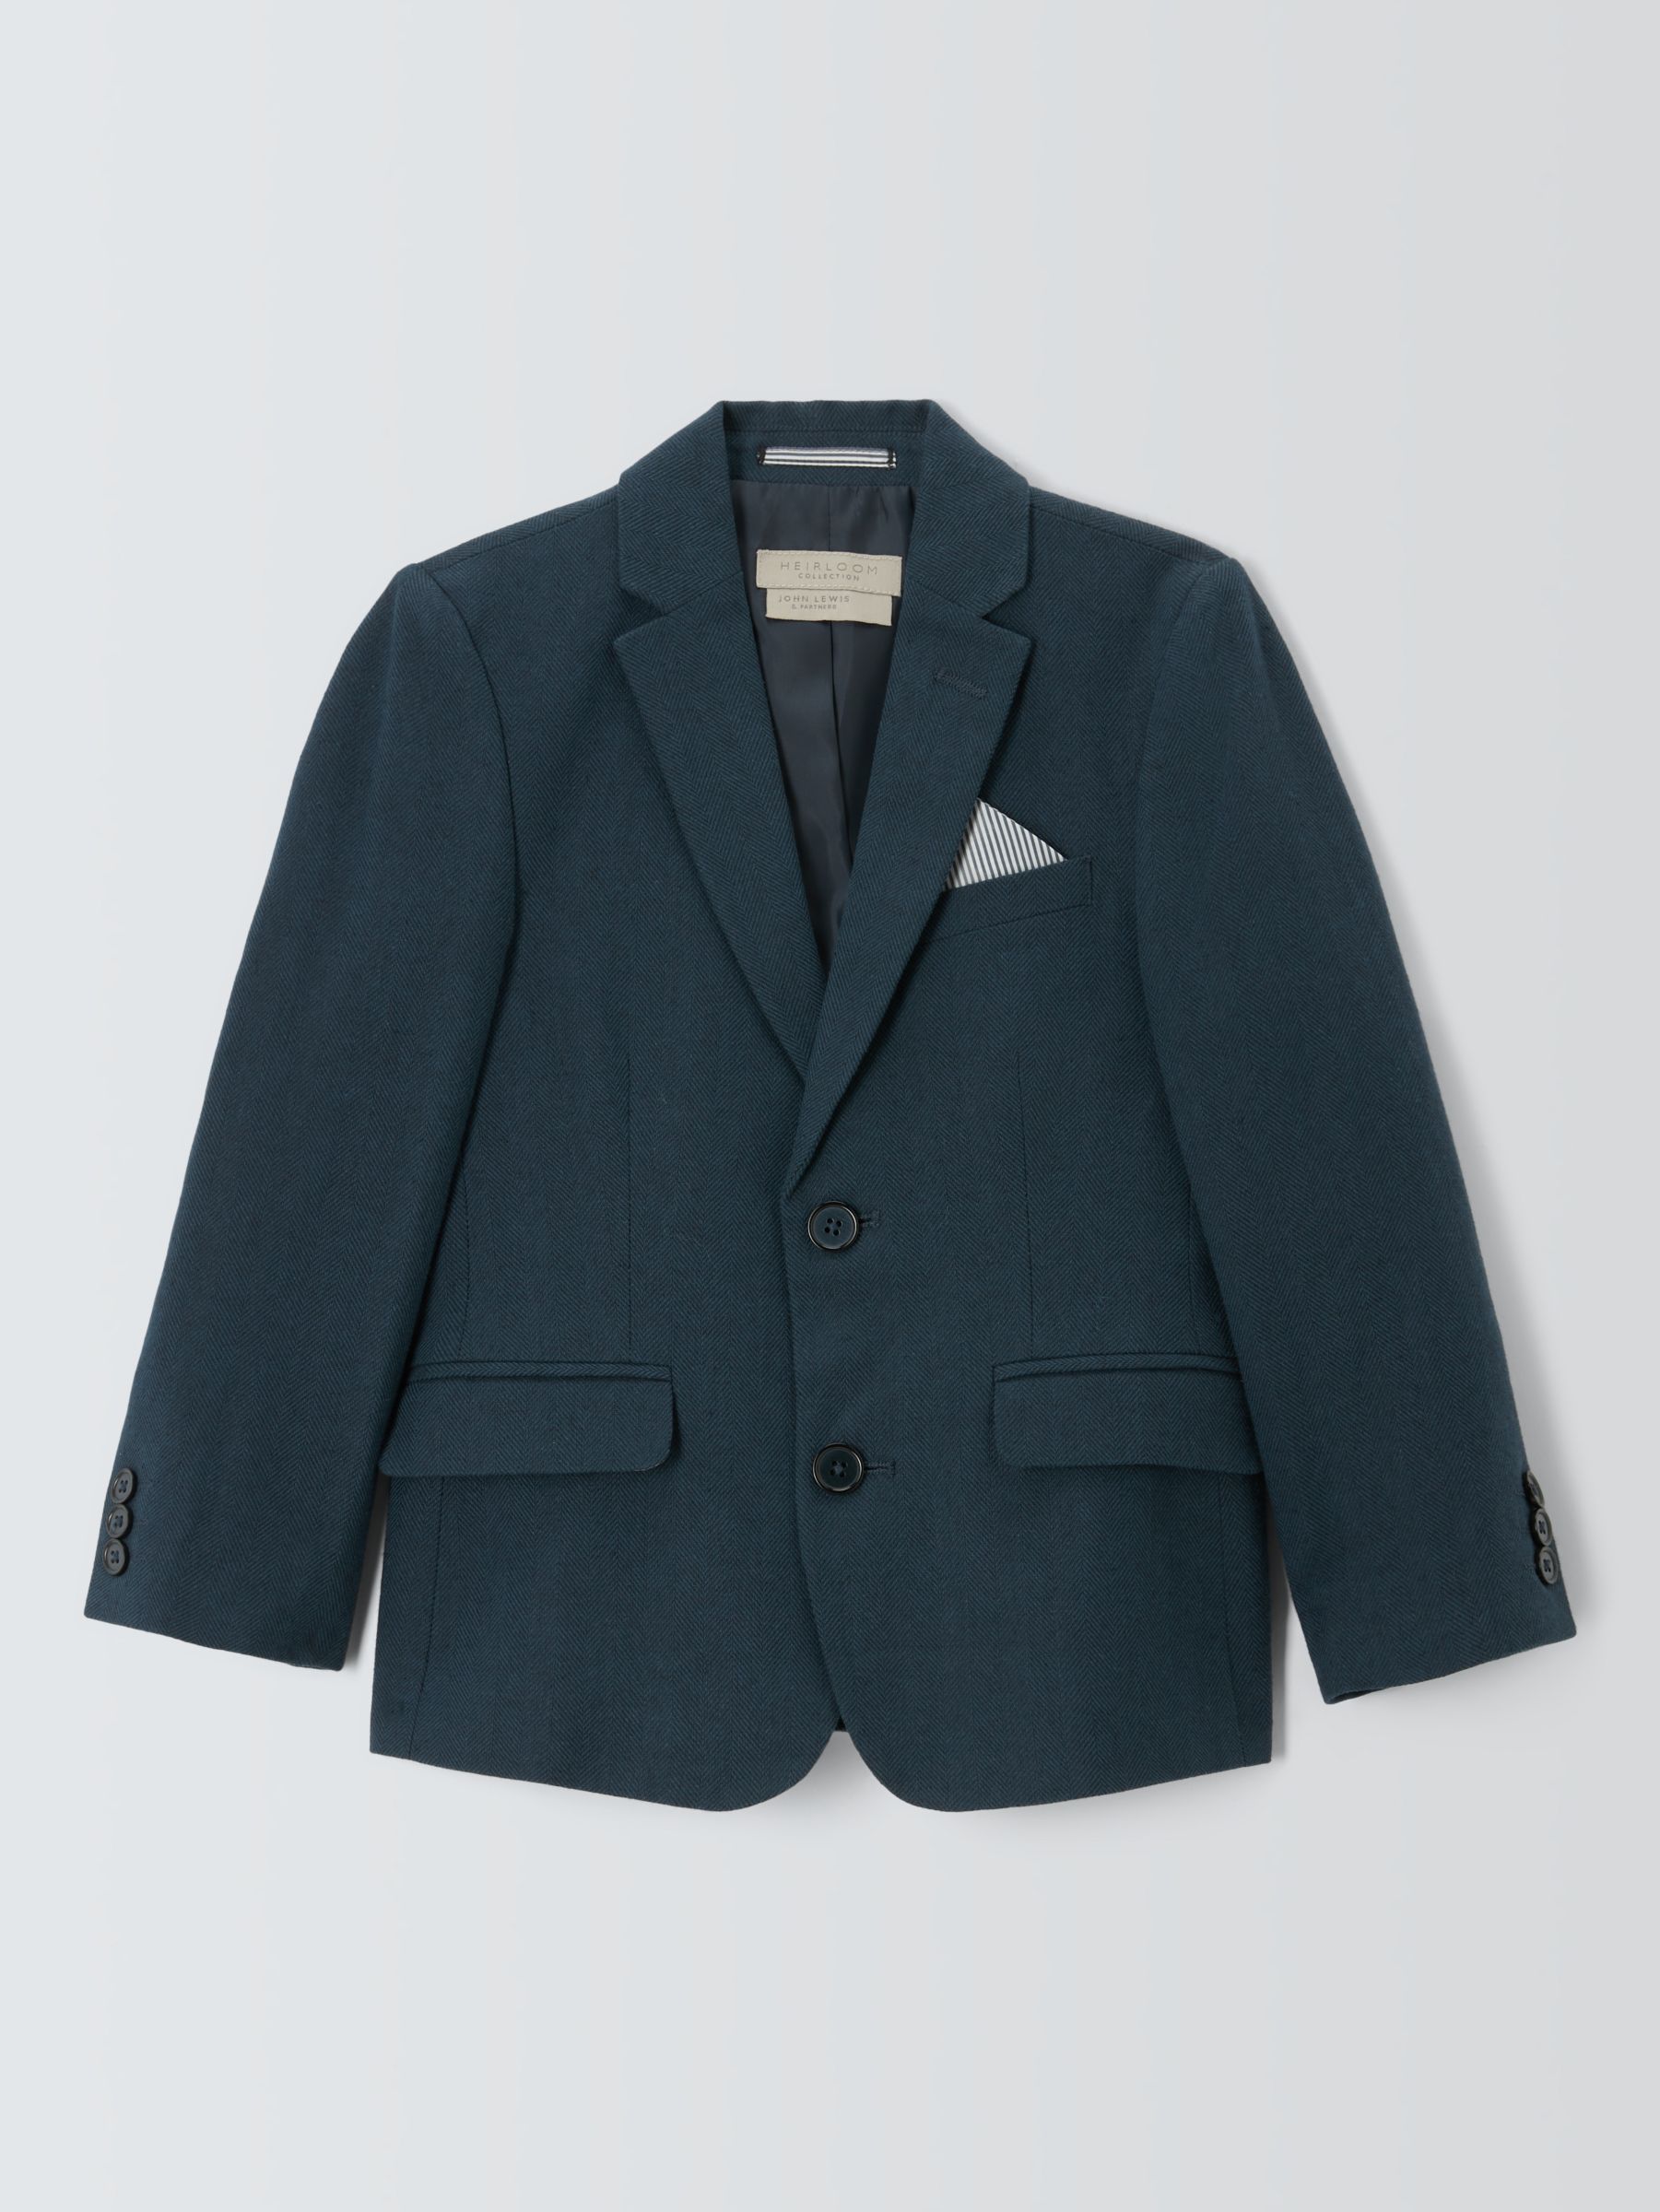 John Lewis Heirloom Collection Kids' Linen Blend Suit Jacket, Navy, 3 years